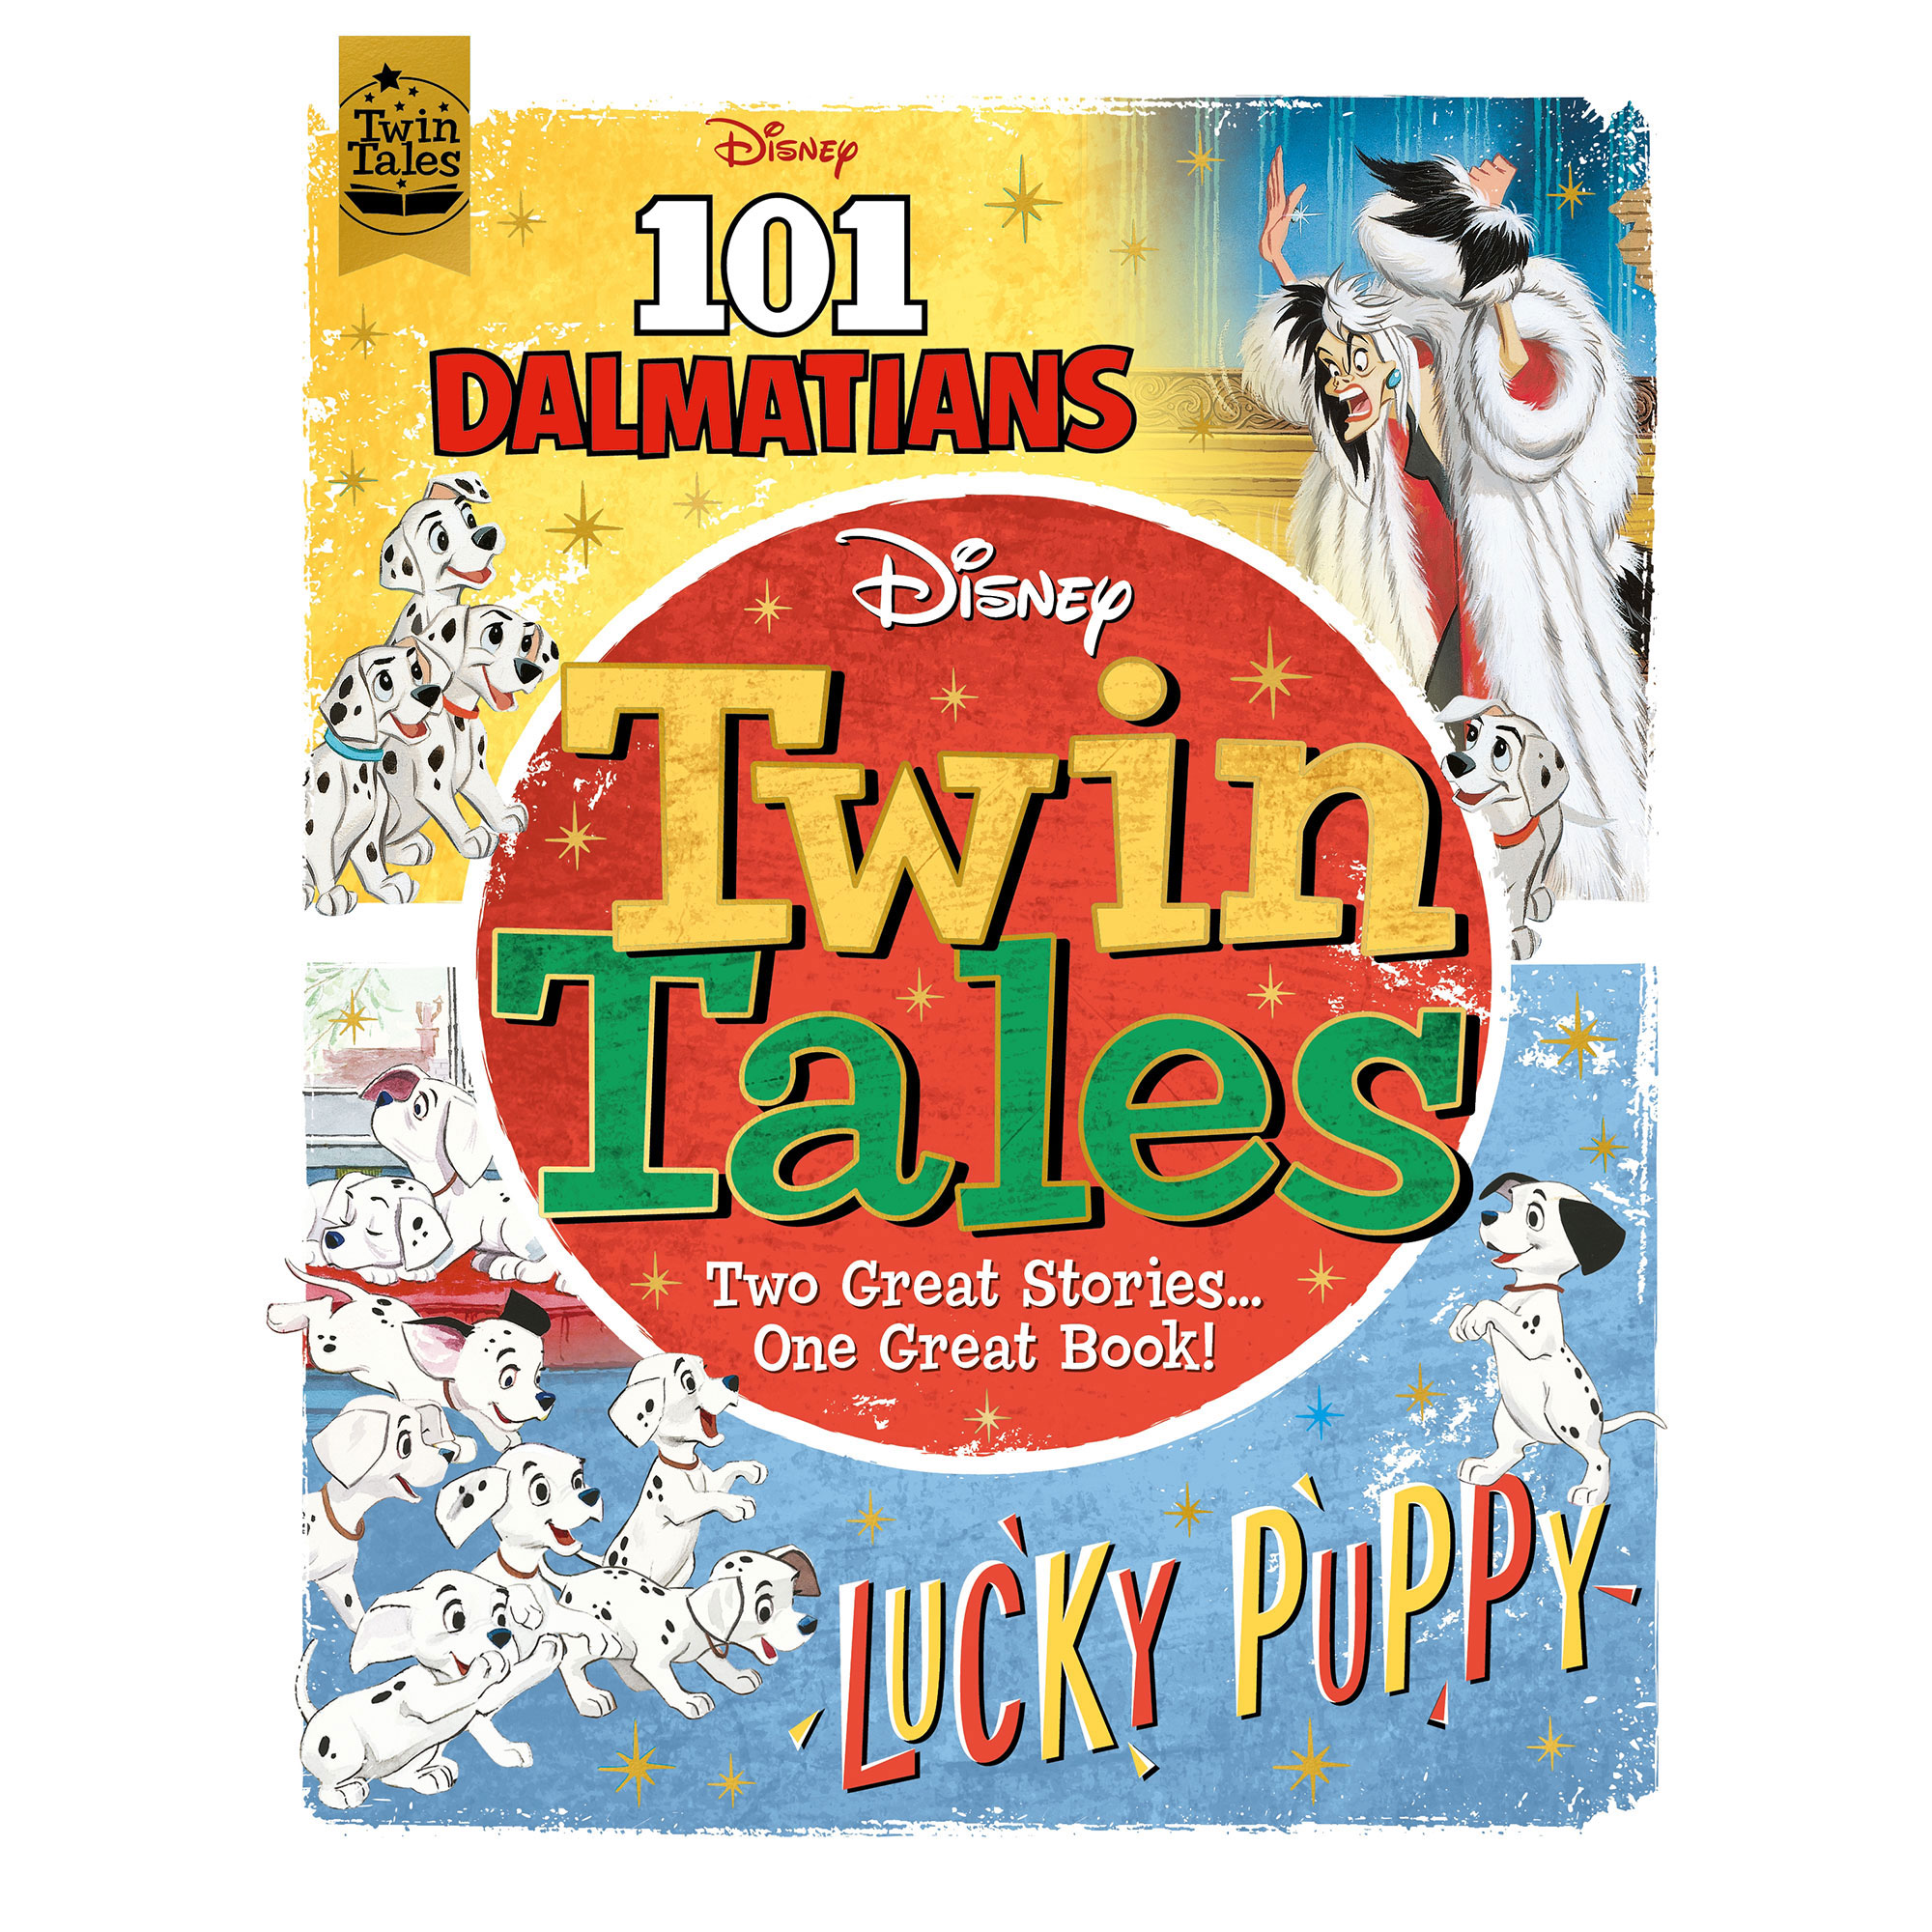 Disney Twin Tales - 101 Dalmatians & Lucky Puppy